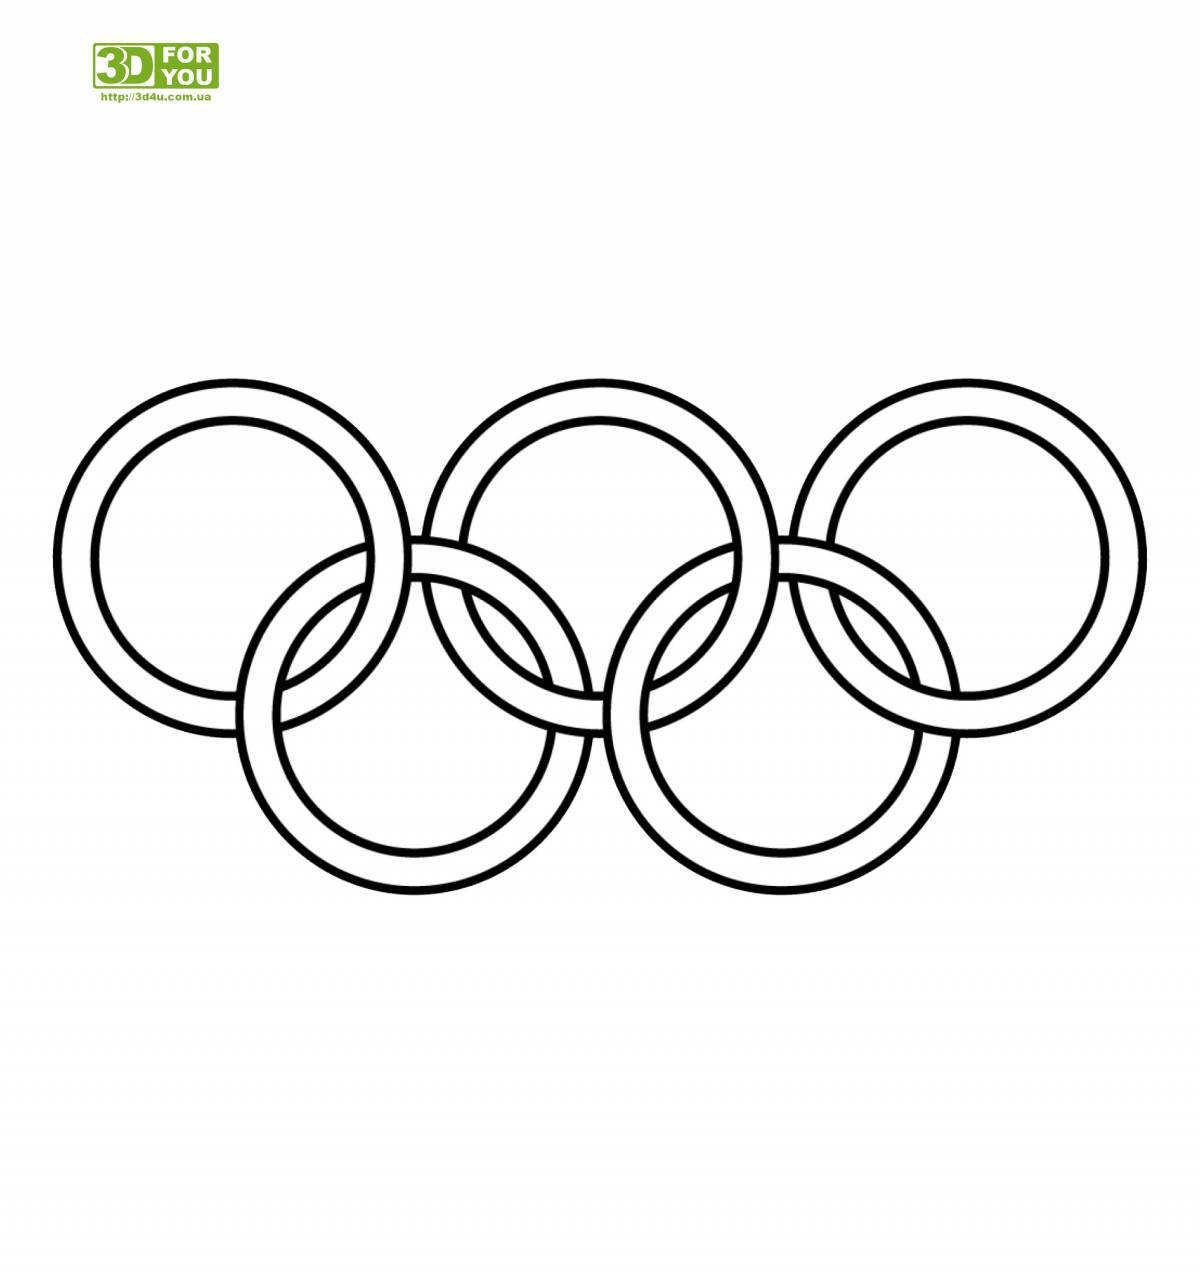 Olympic rings #1